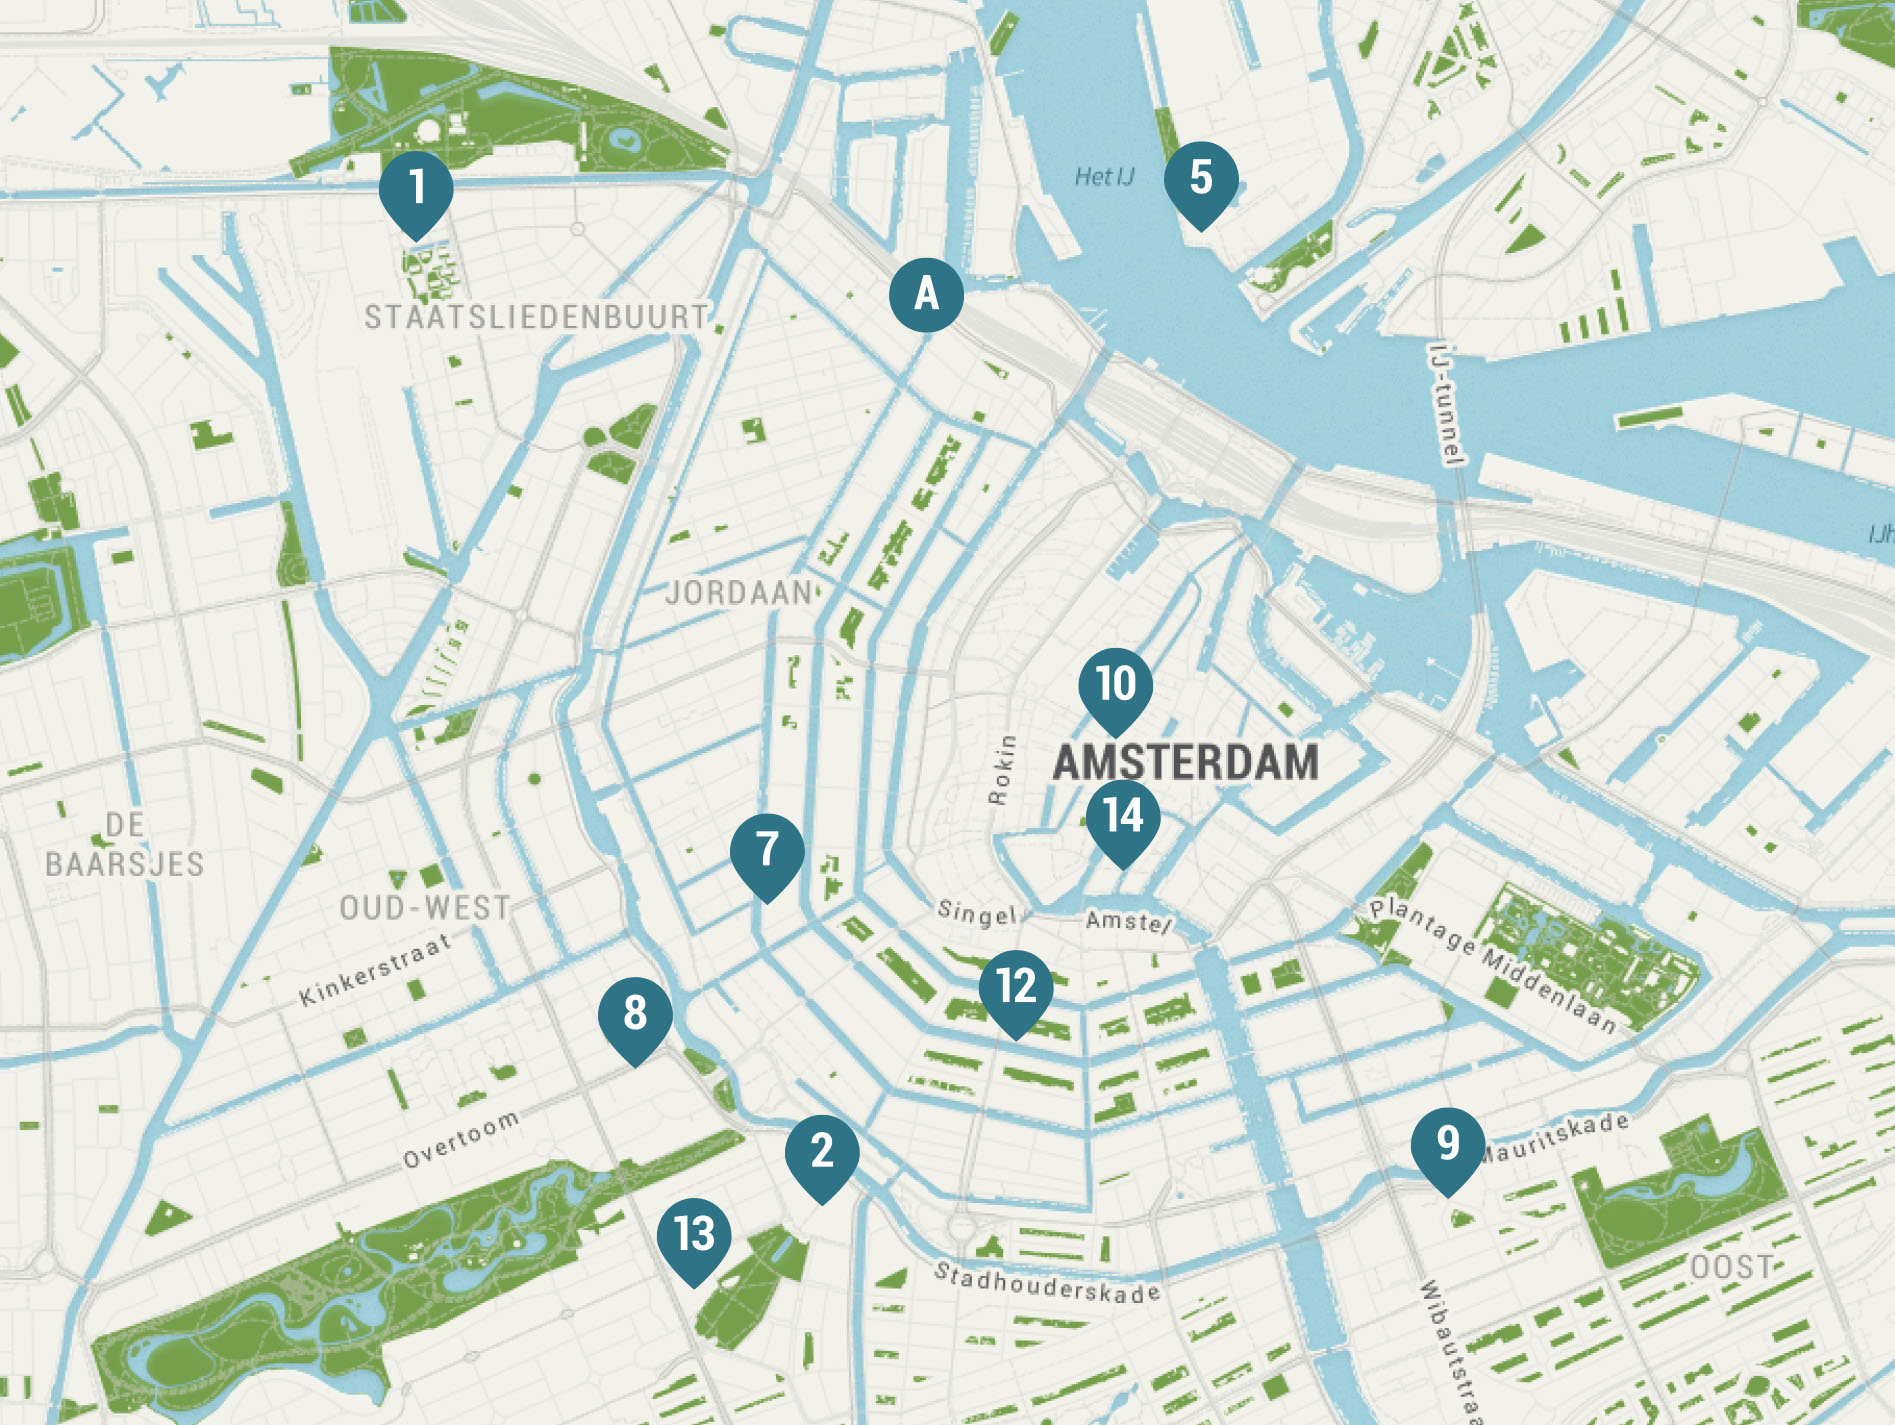 Alternative Guide to Amsterdam